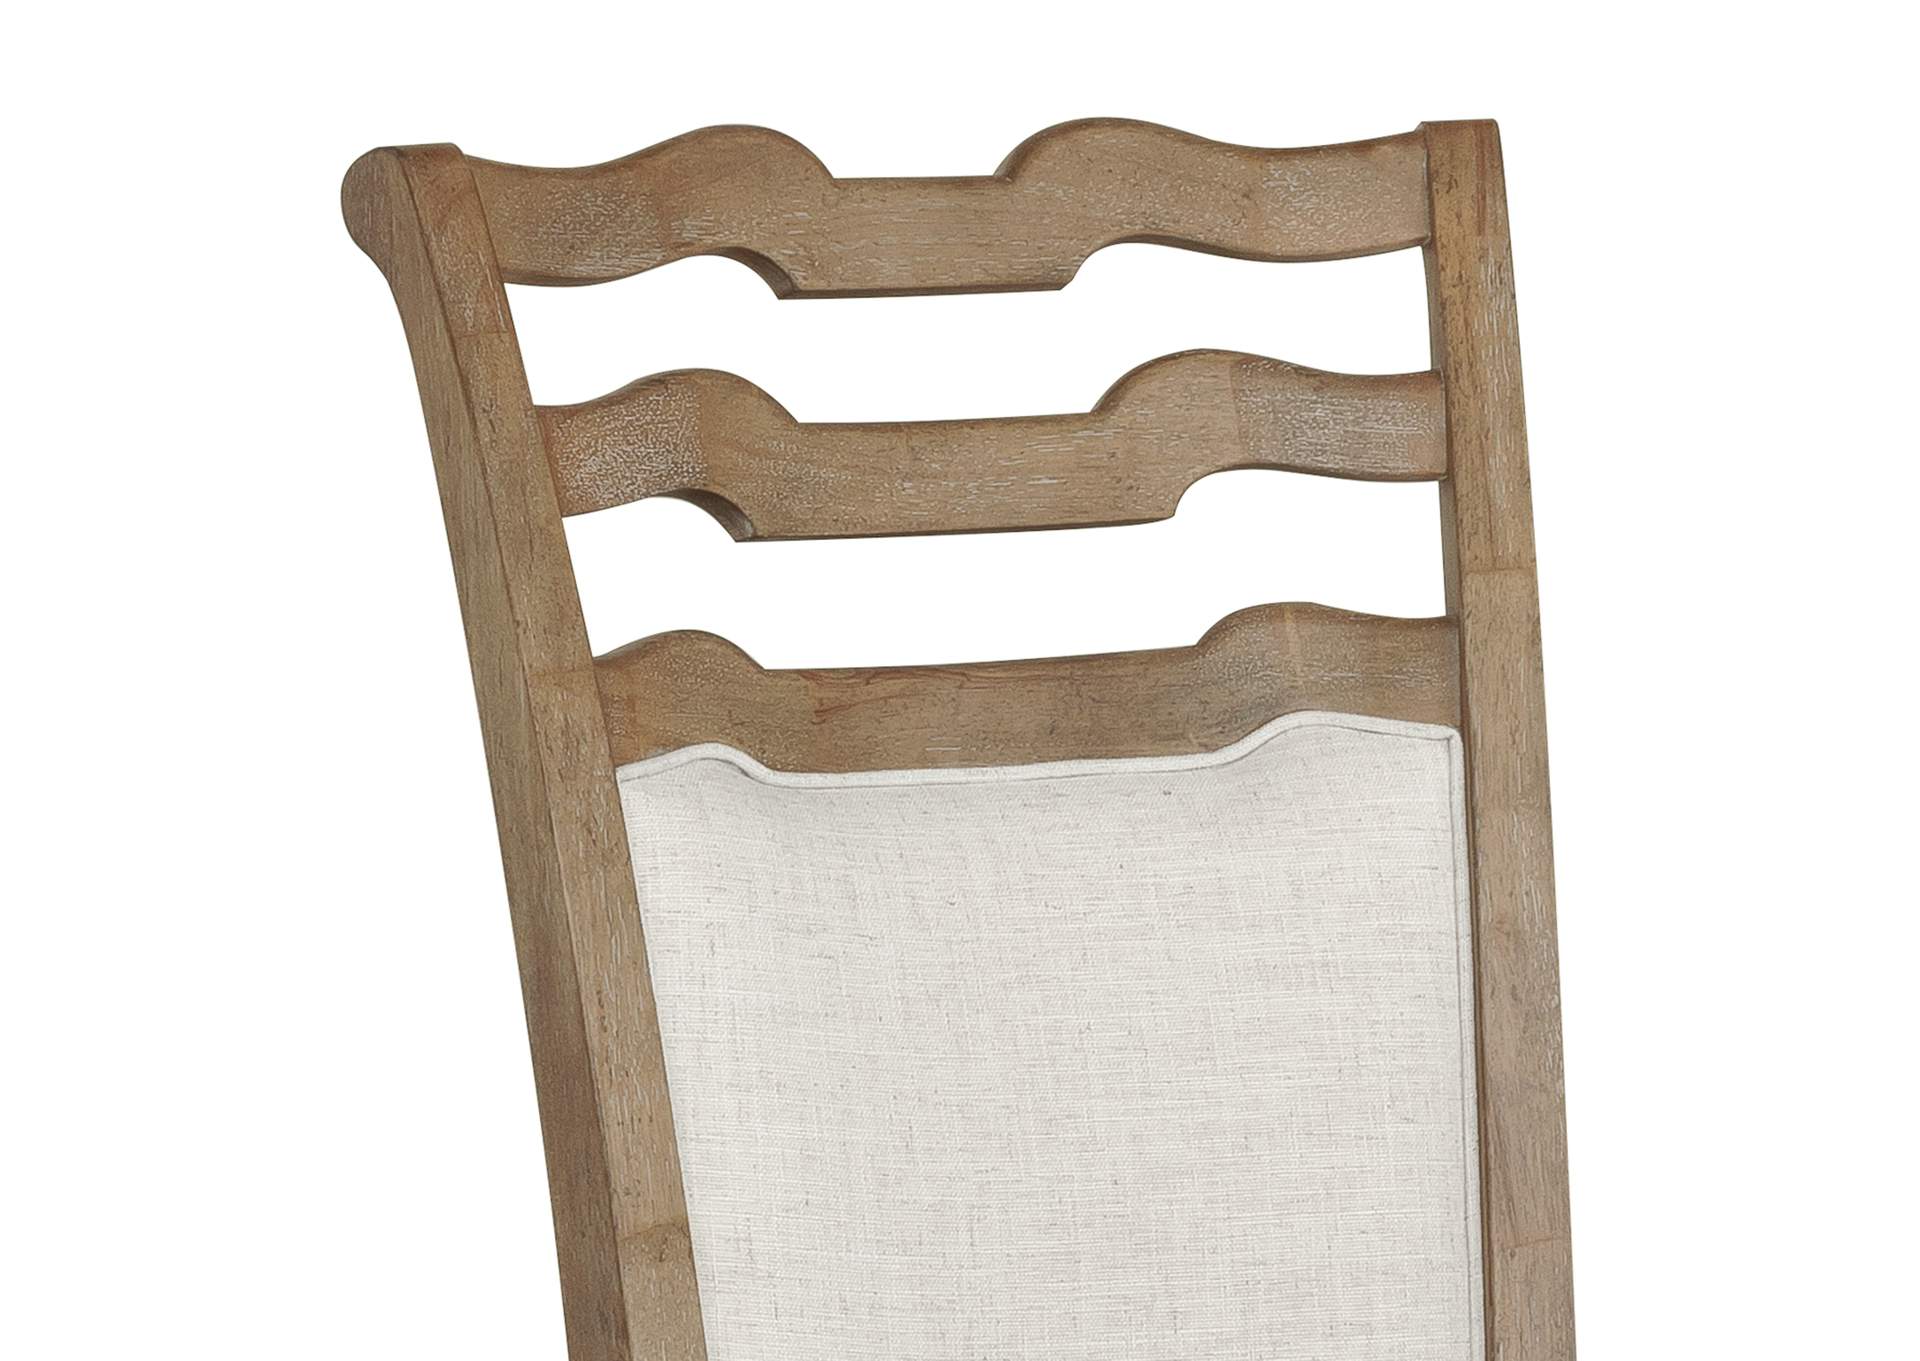 Weston Hills Upholstered Side Chair (2 Pack),Pulaski Furniture